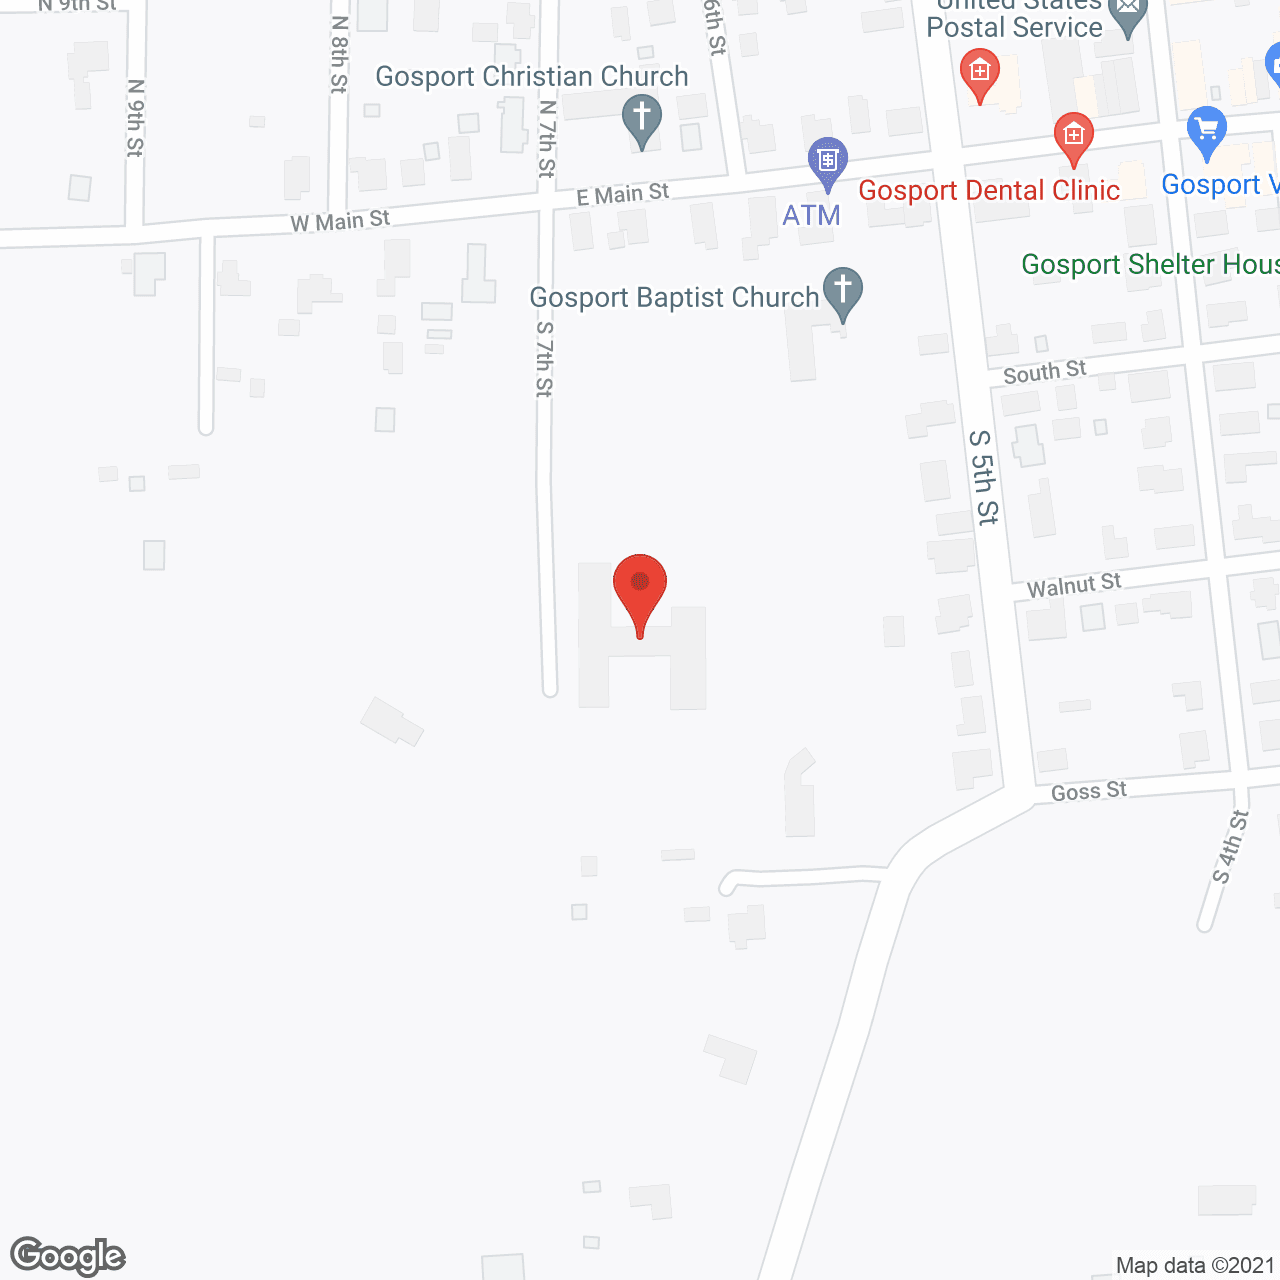 Gosport Nursing Home in google map